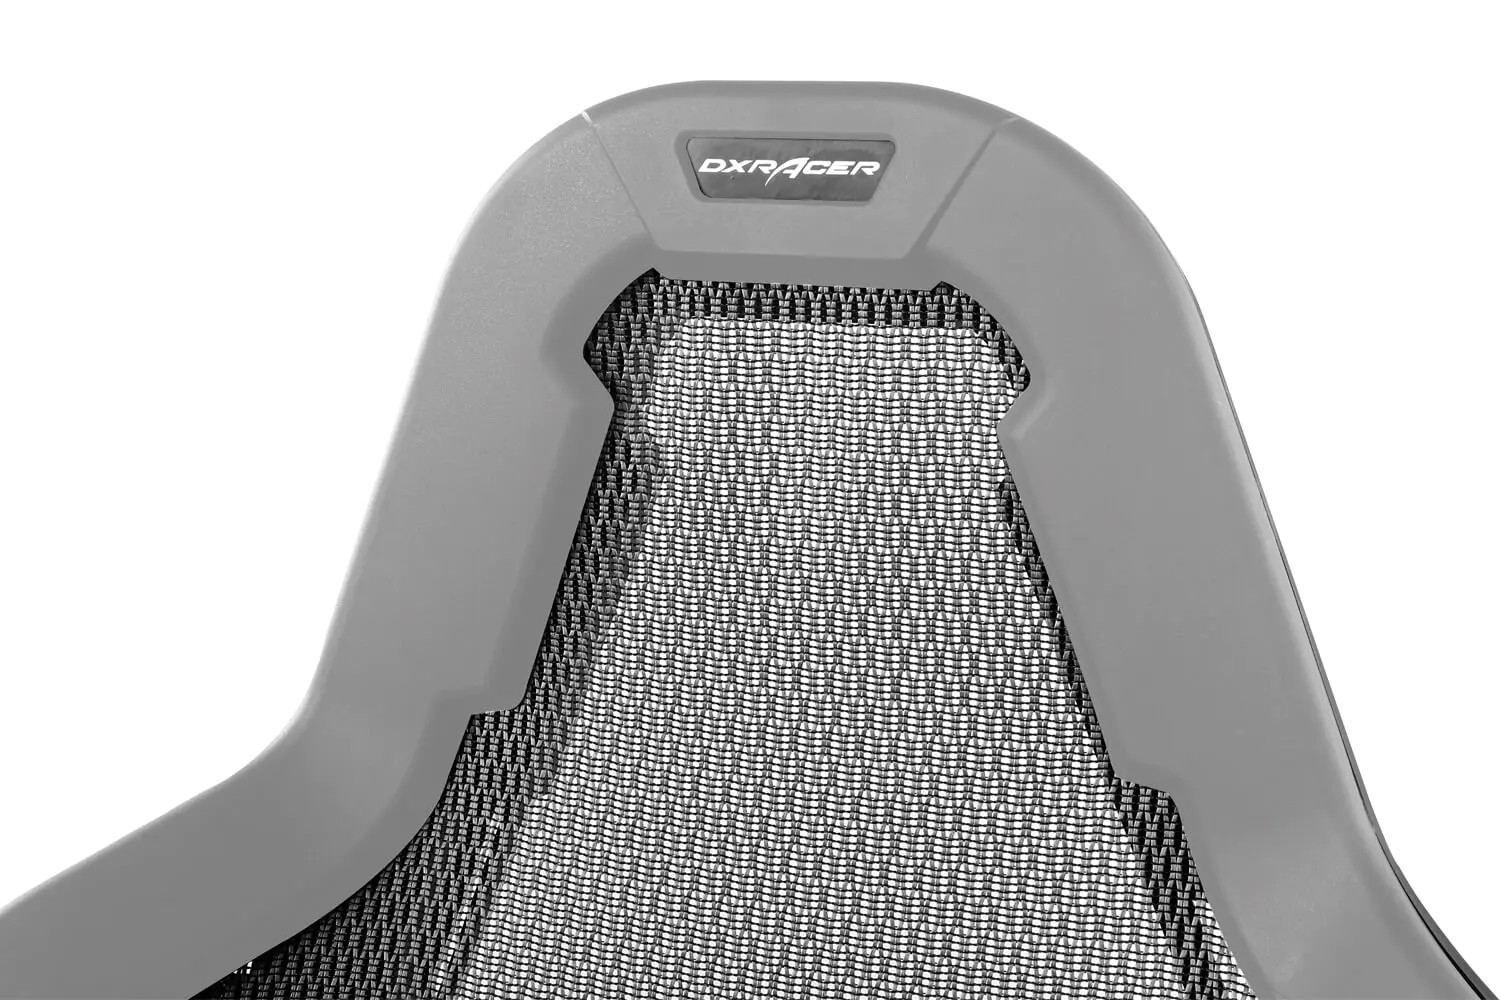 DXRacer AIR/D7400/GN компьютерное кресло